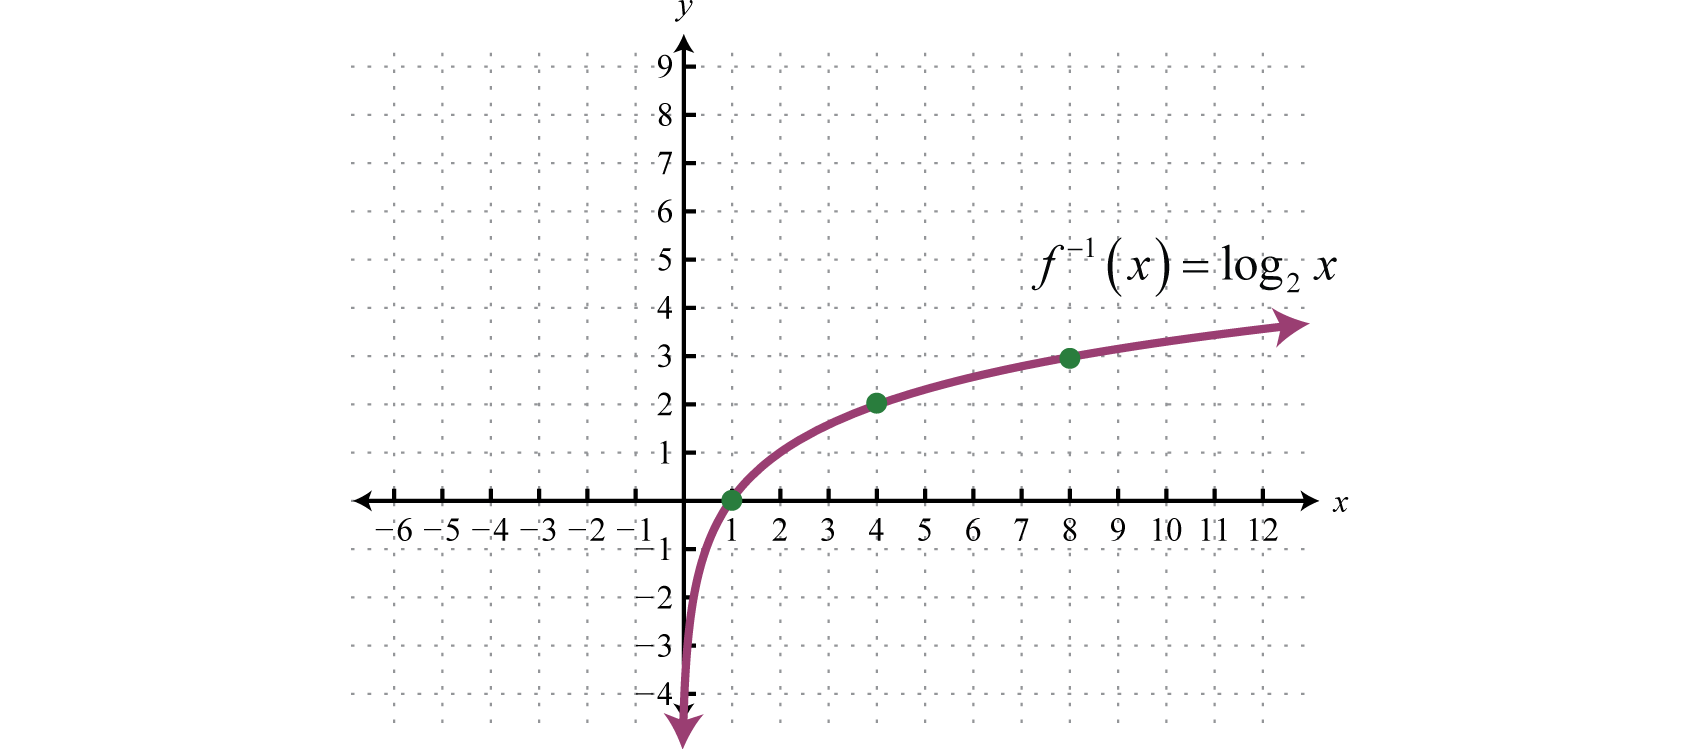 graph of log base 2 of x